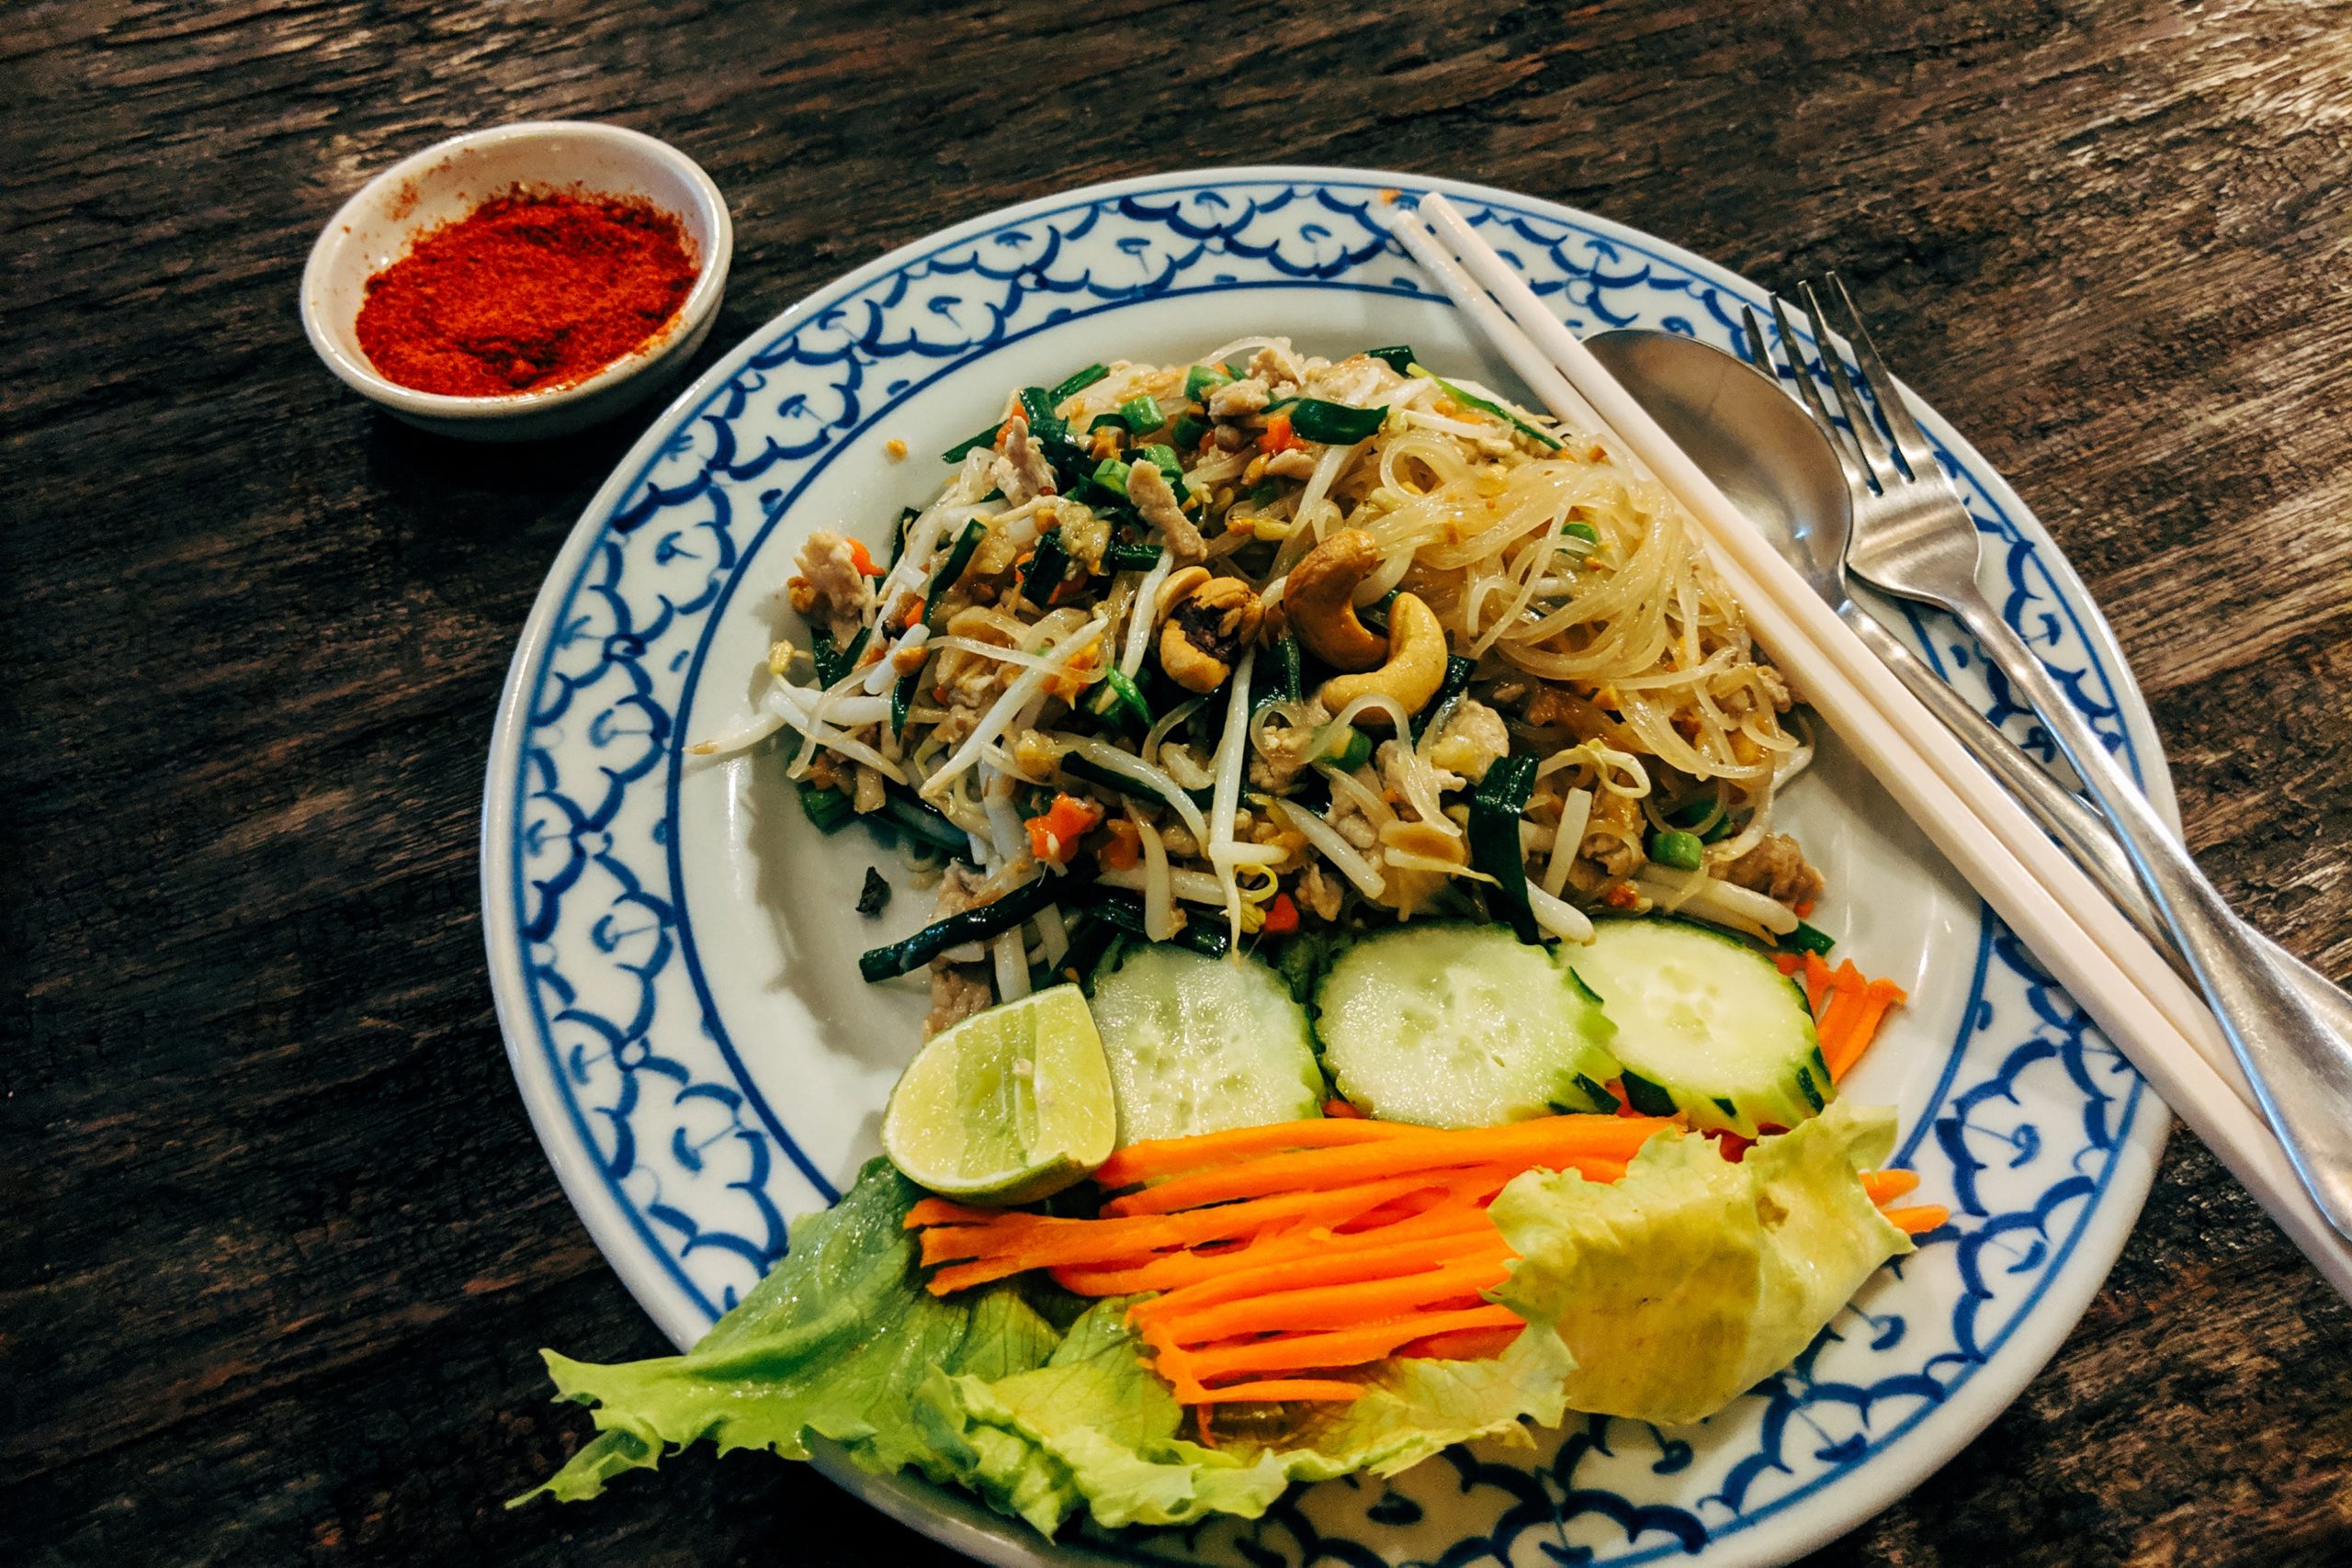 Sydney Thai restaurant recommend